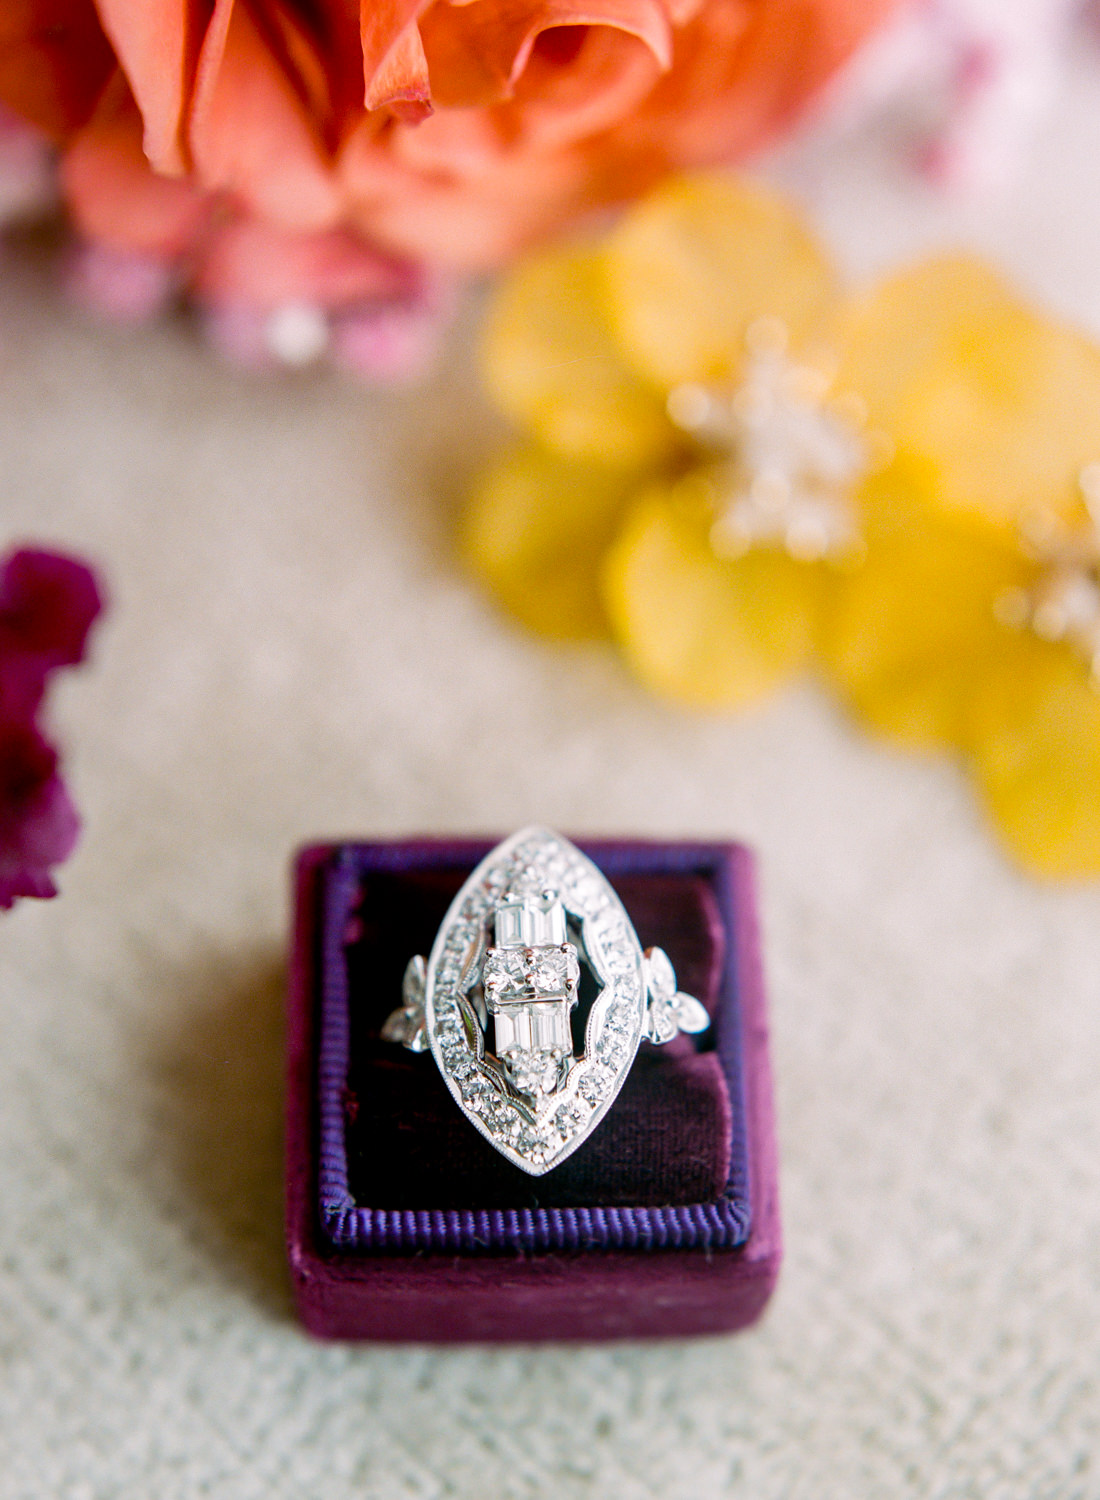 Sturhahn Jewelers diamond wedding ring in purple velvet Mrs Box, St. Louis wedding photographer Erica Robnett Photography